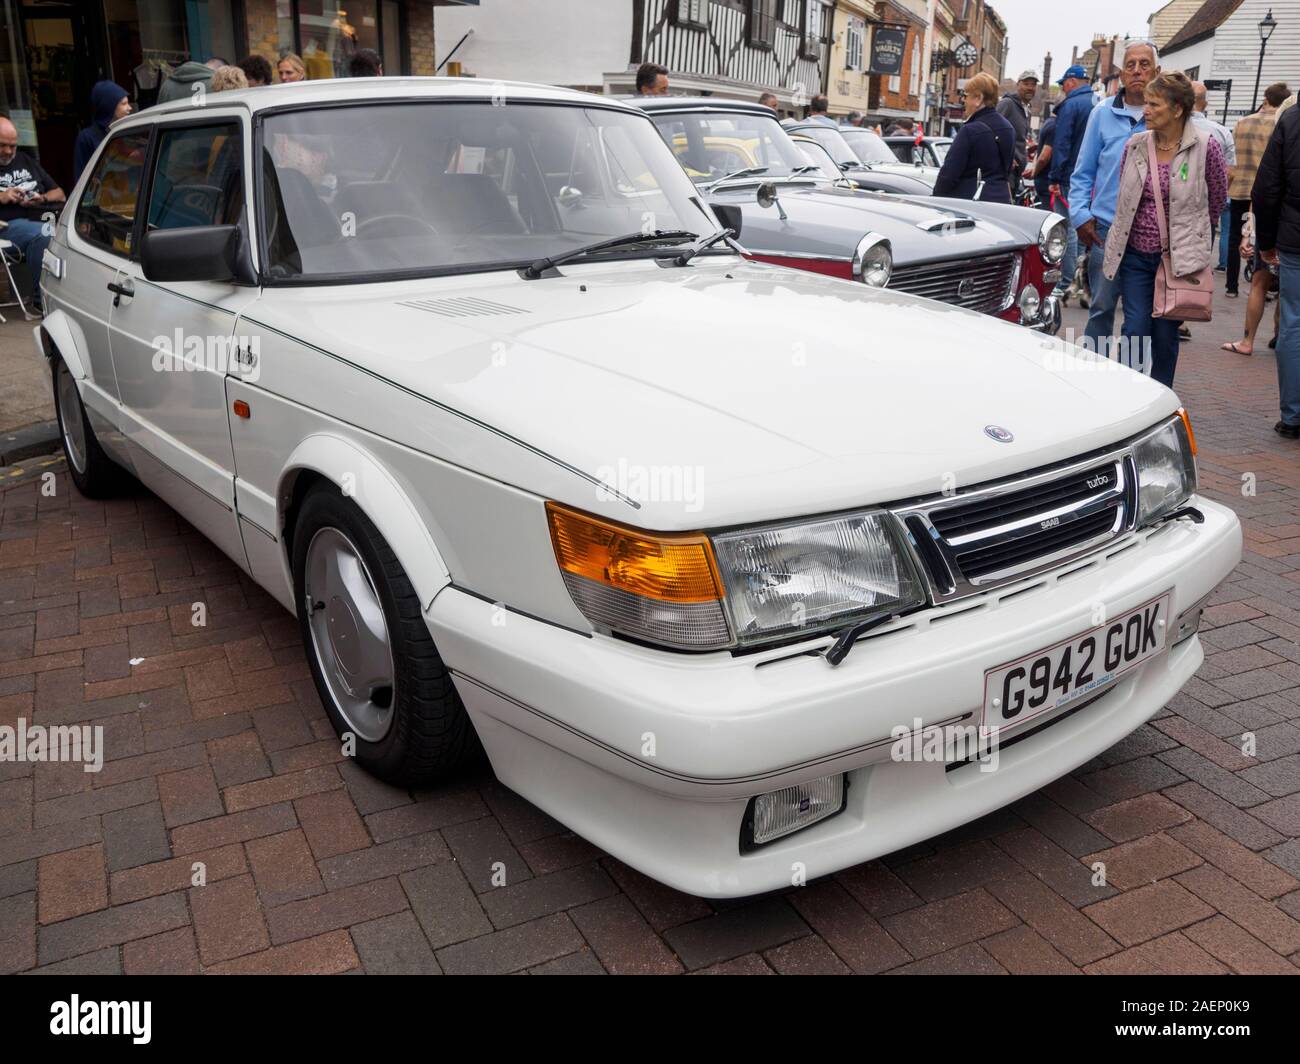 A white Saab 900 Turbo at a car show in Faversham. Stock Photo